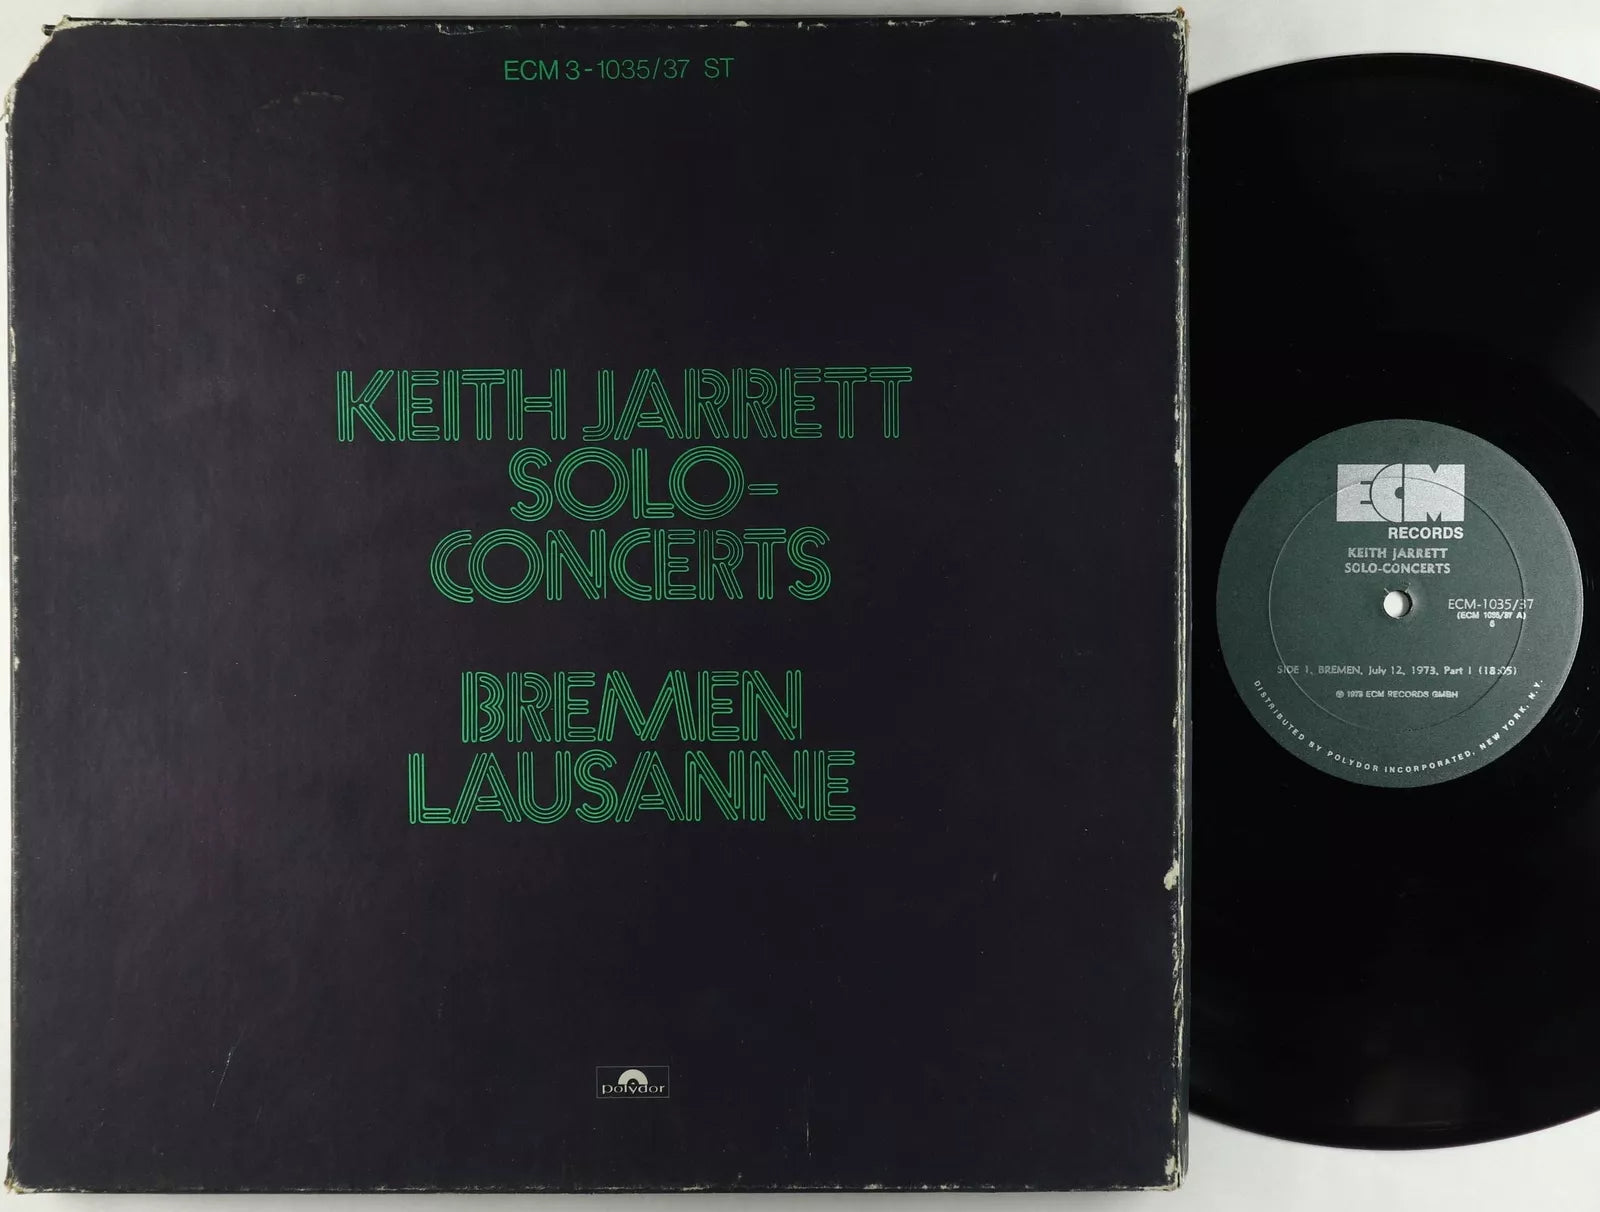 Keith Jarrett - Solo Concerts: Bremen / Lausanne - VG+ 3 LP Record Box Set 1973 ECM USA Vinyl & Booklet - Jazz / Free Improvisation